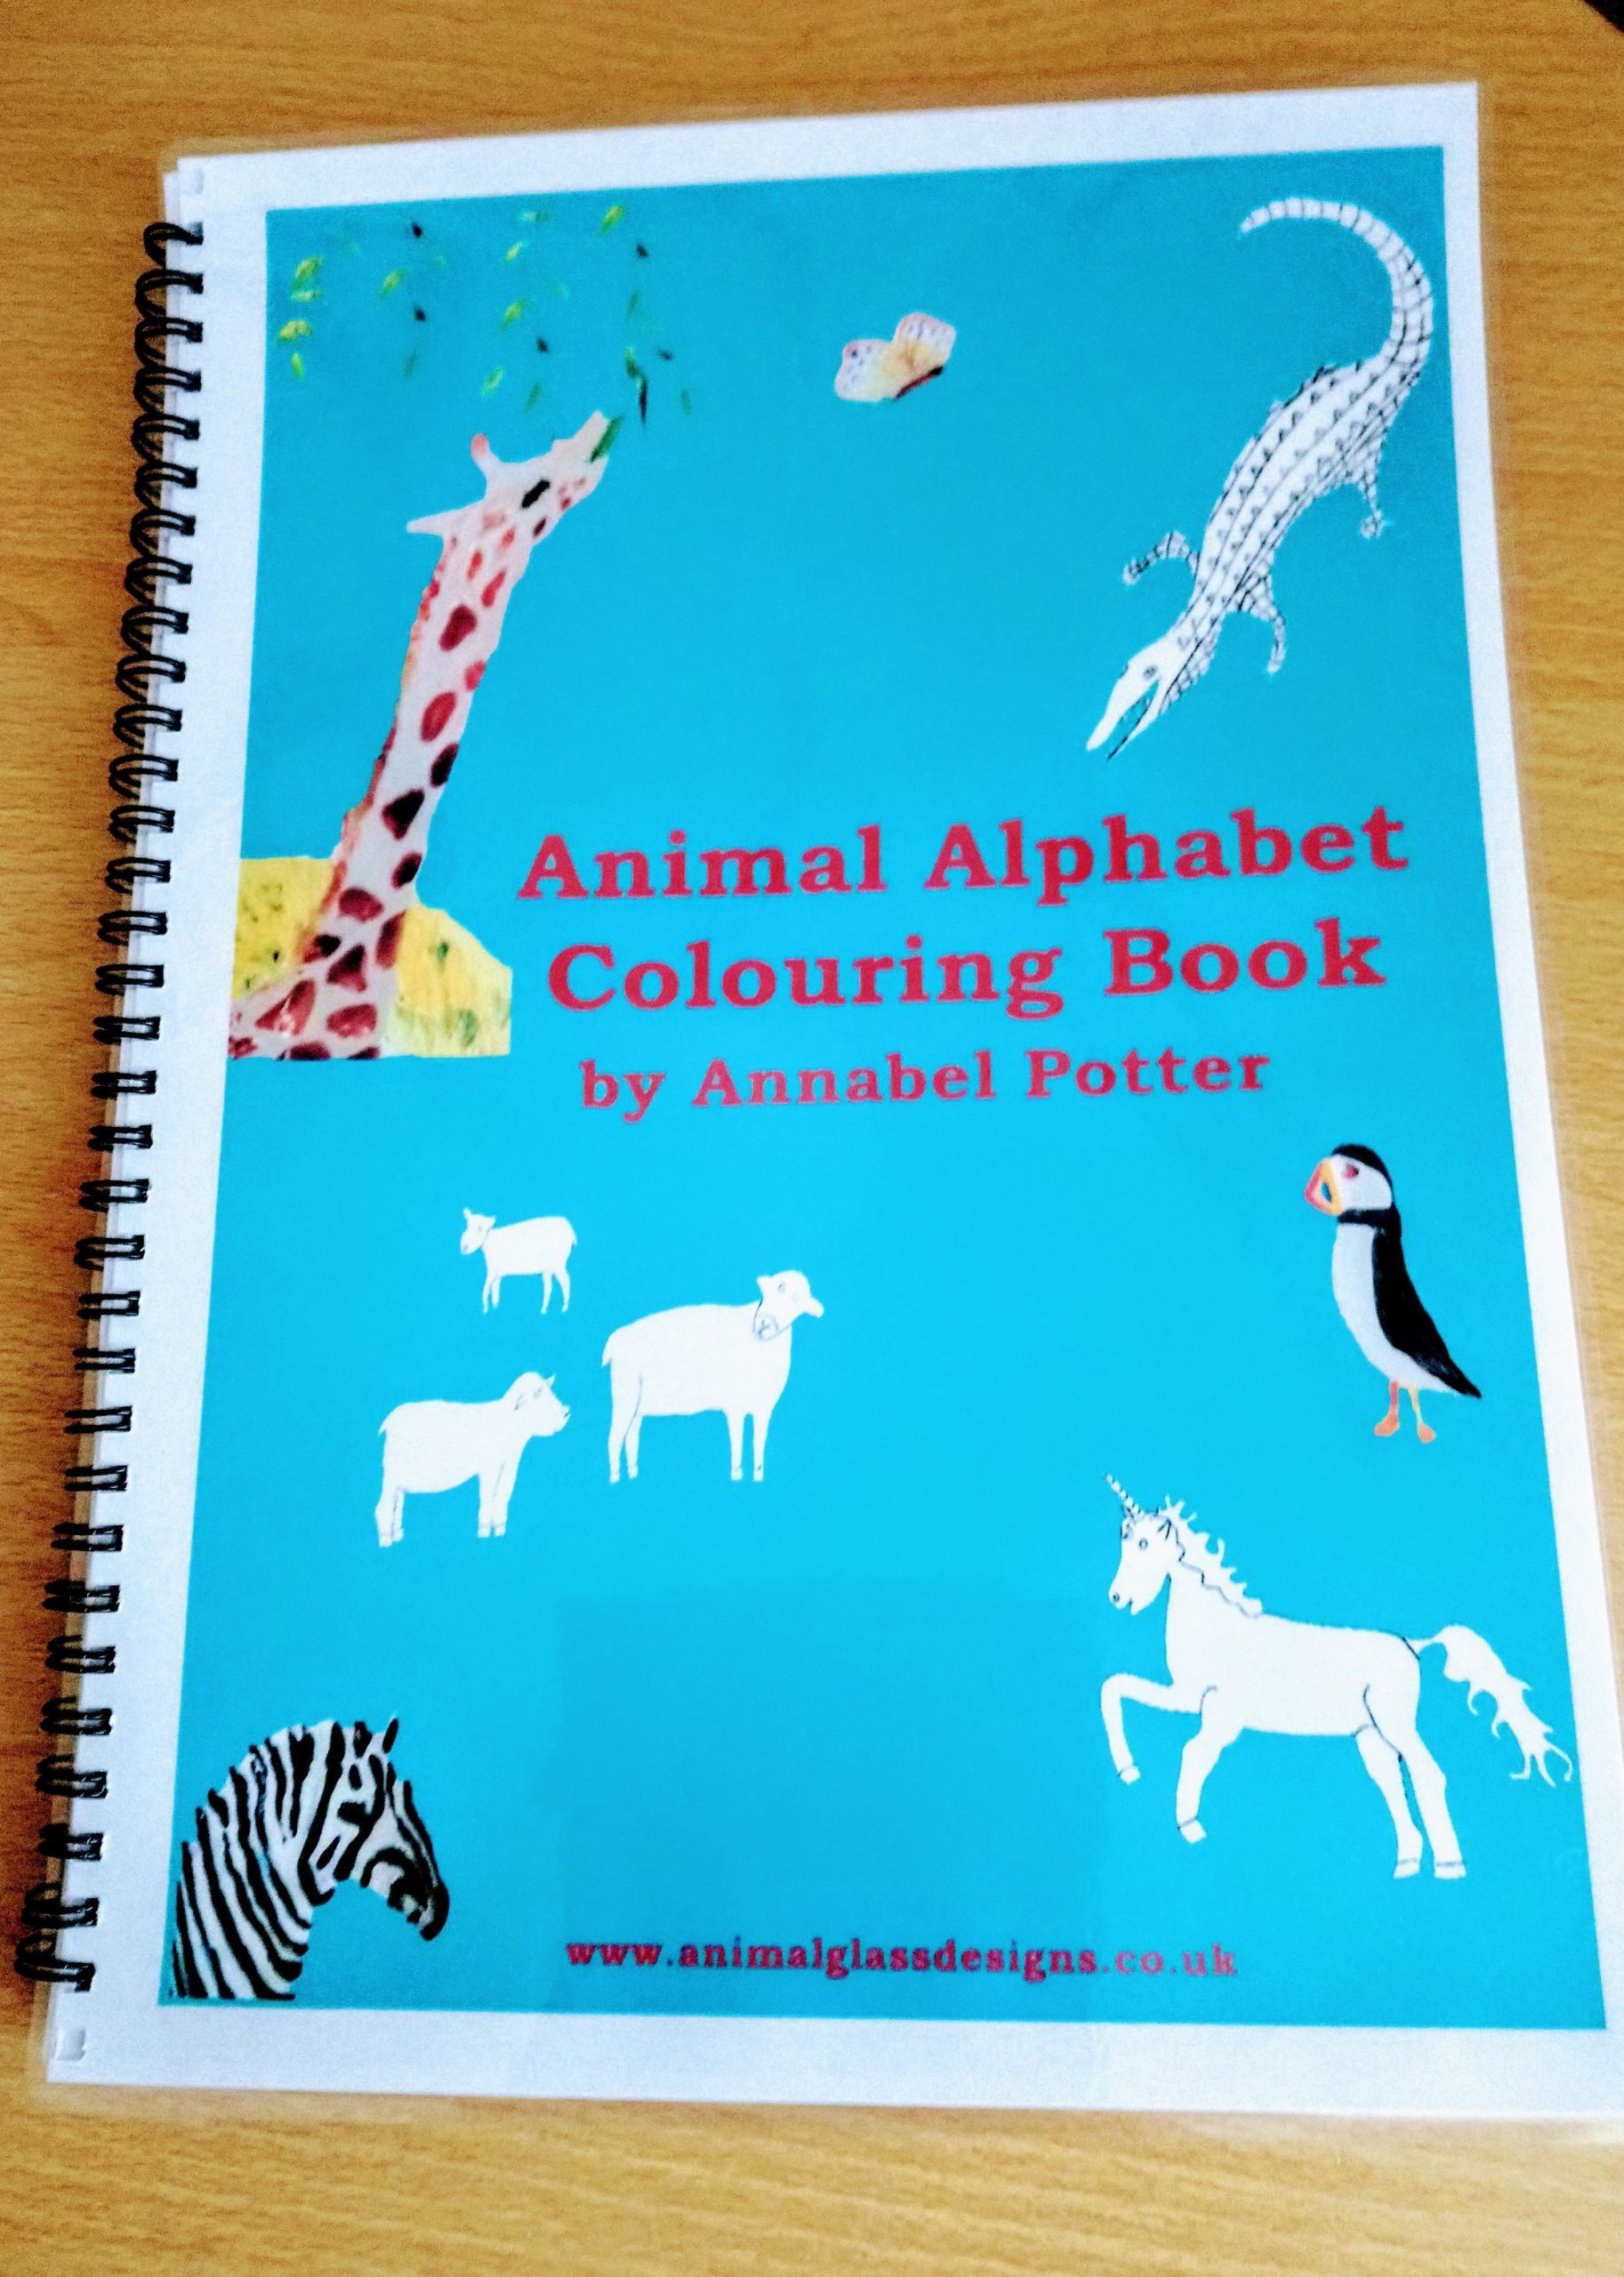 Cover of sprial bound animal alphabet colouring book